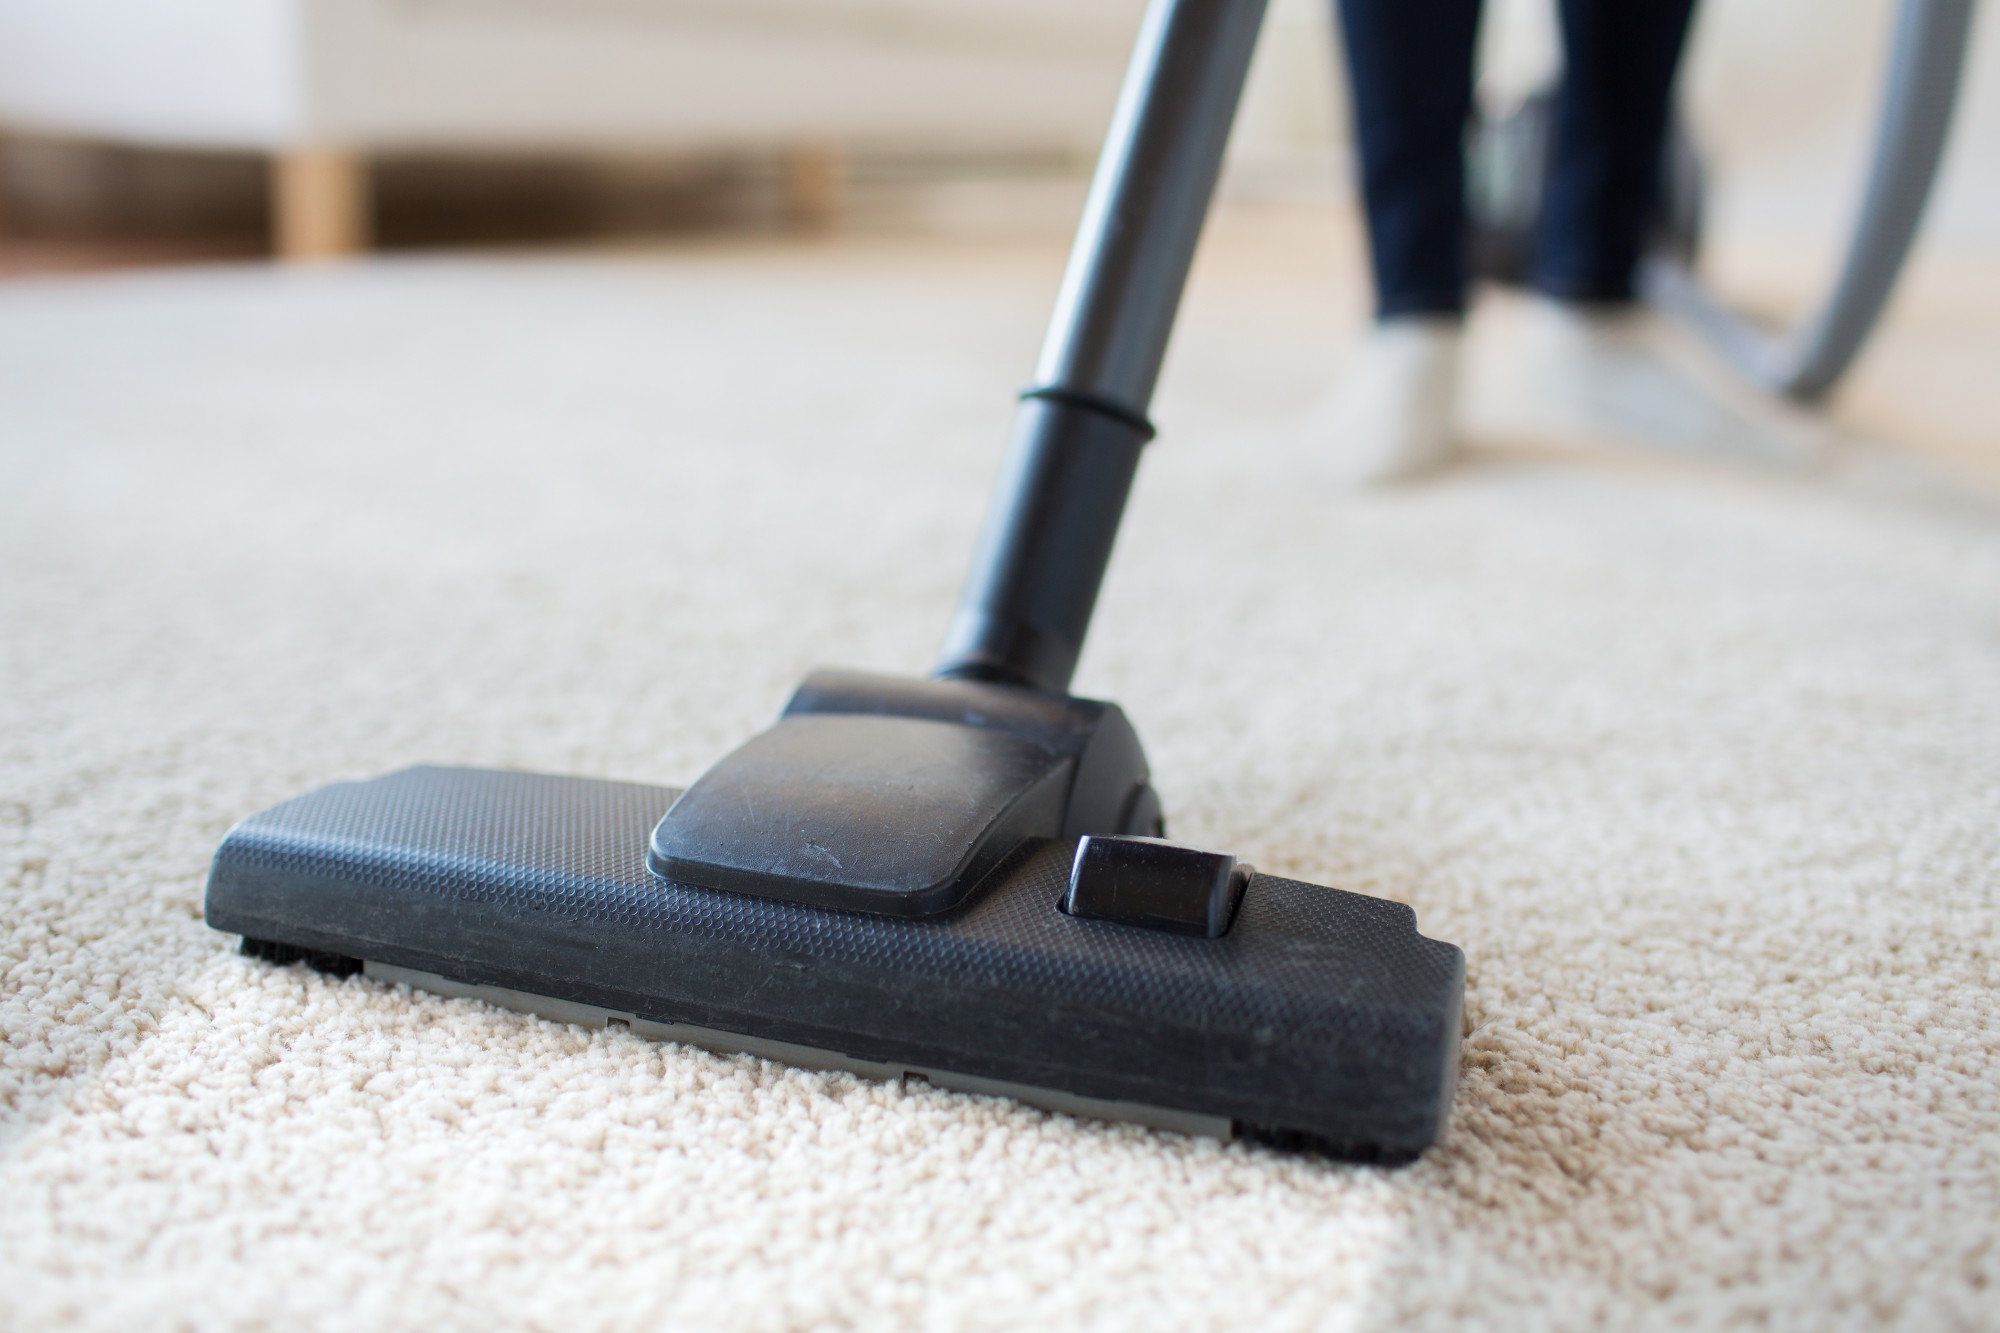 Clean Carpet at Home